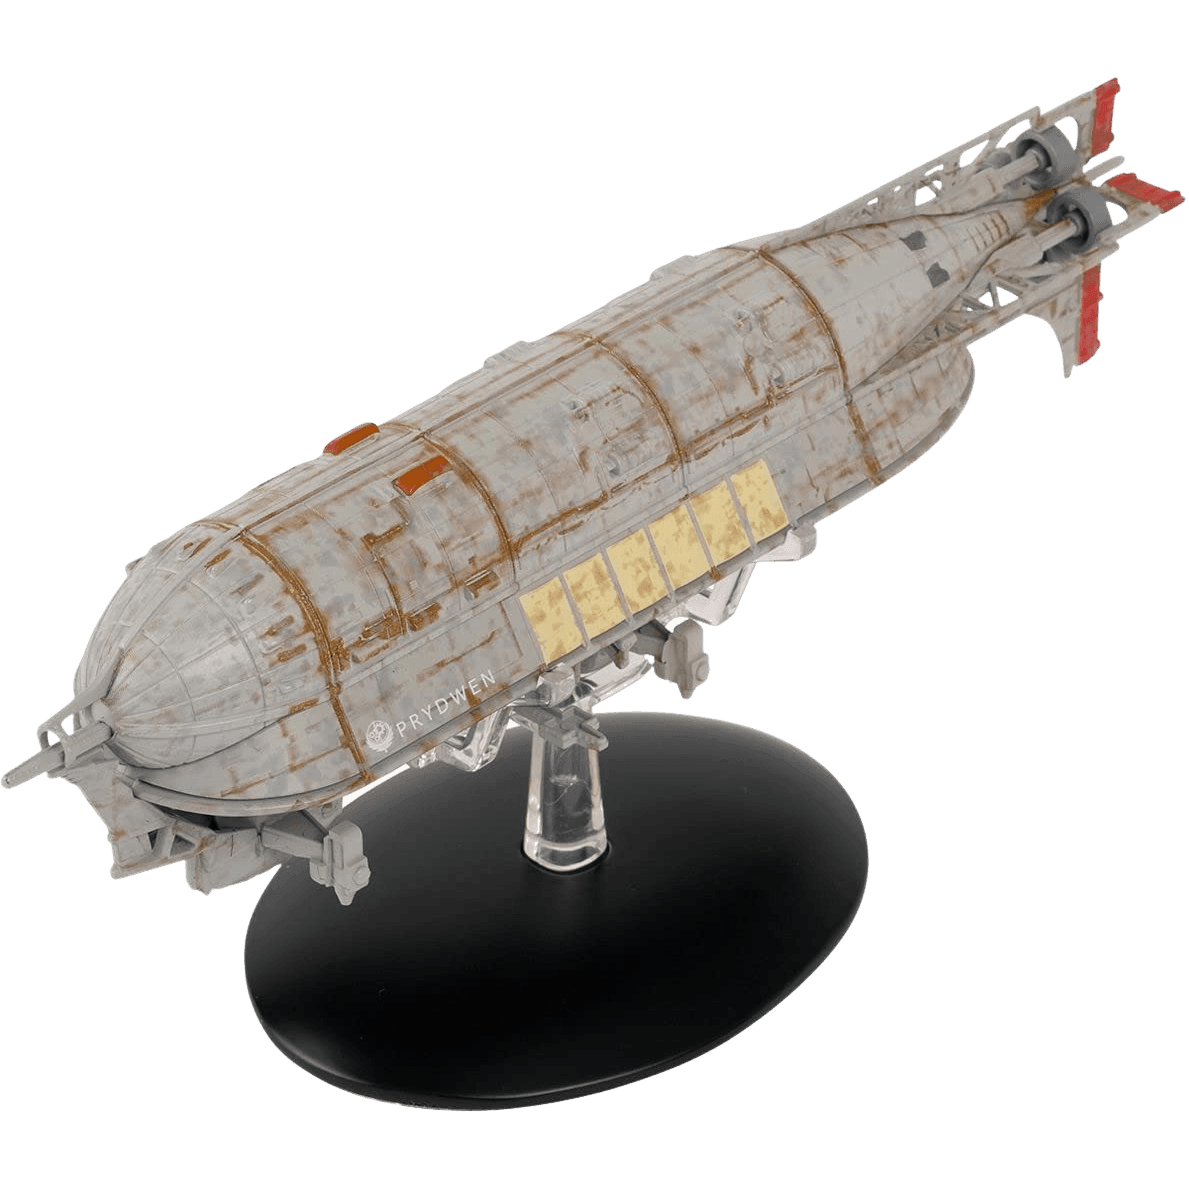 Fallout Prydwen Model Ship Replica (Eaglemoss Collections) - The Card Vault